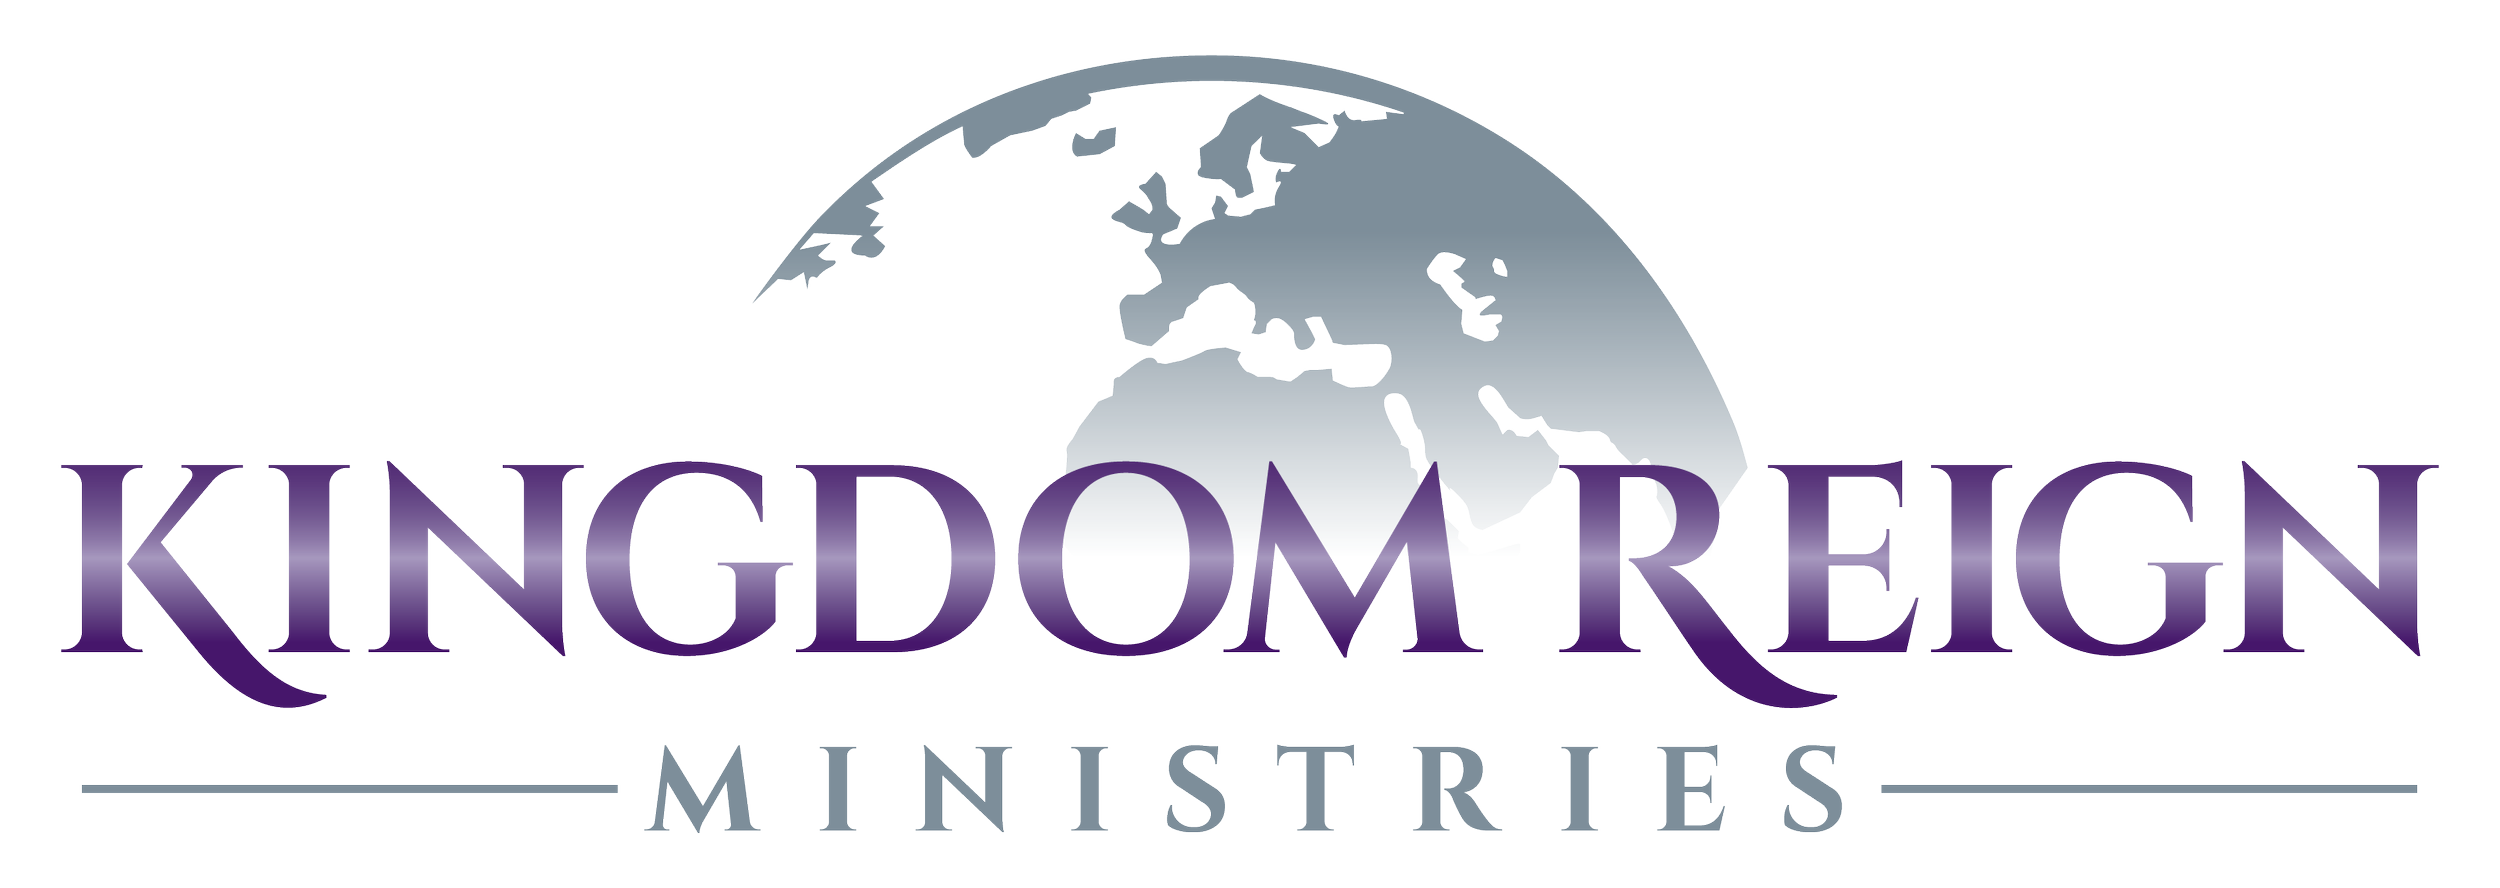 KINGDOM REIGN MINISTRIES